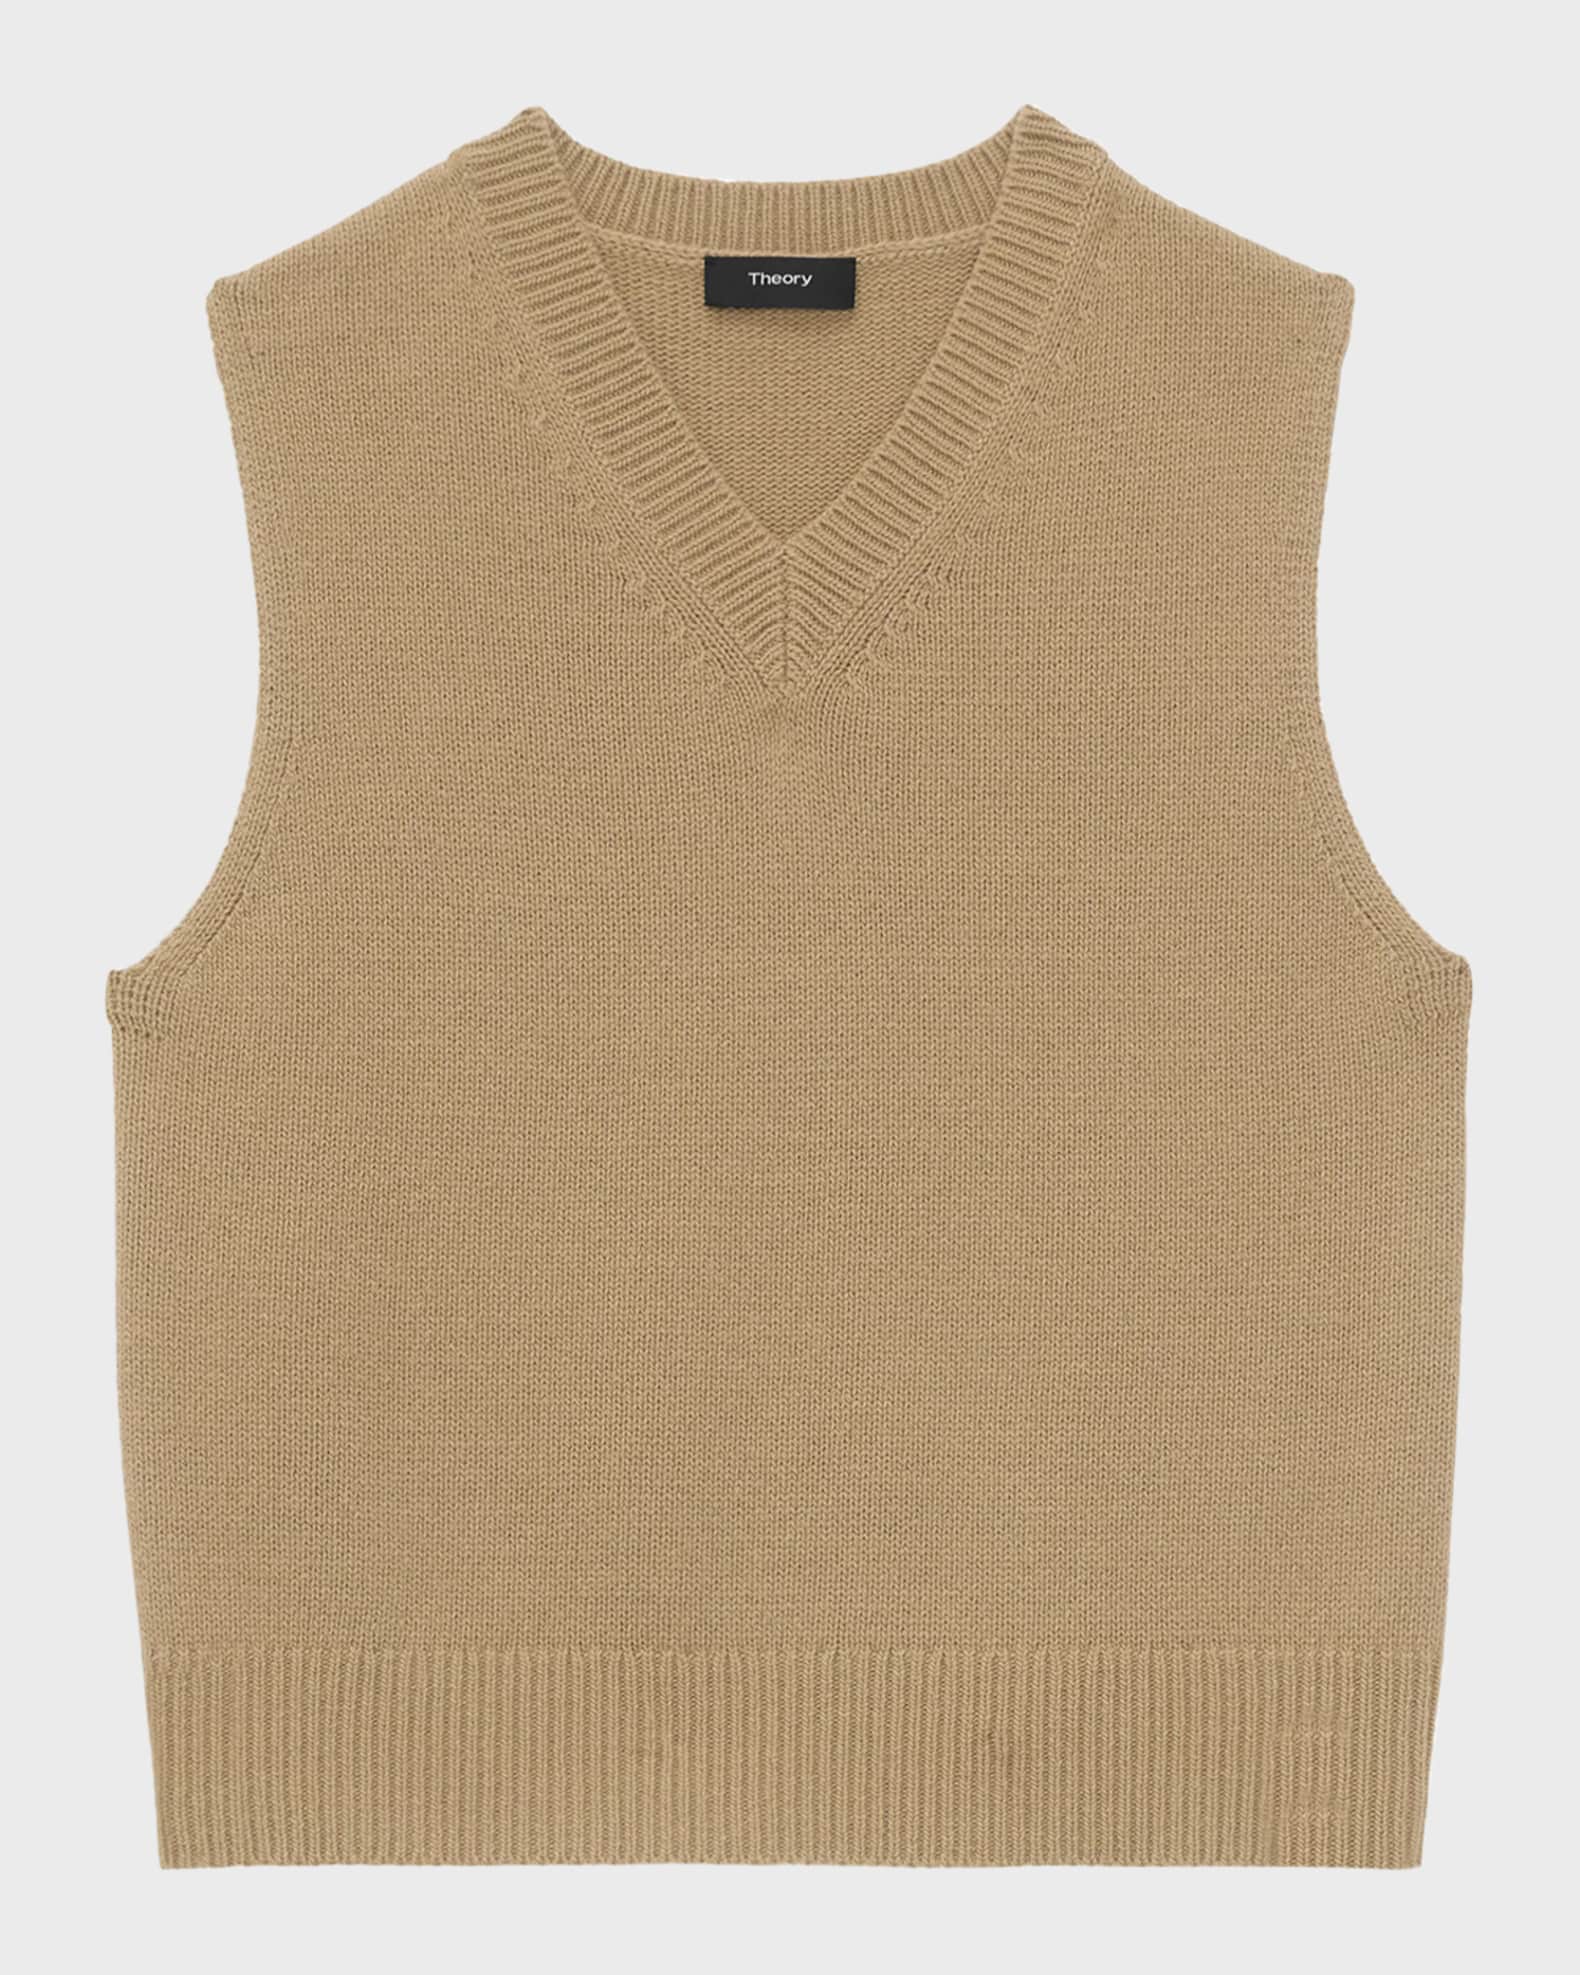 Theory Wool & Cashmere Shrunken Sweater Vest | Neiman Marcus